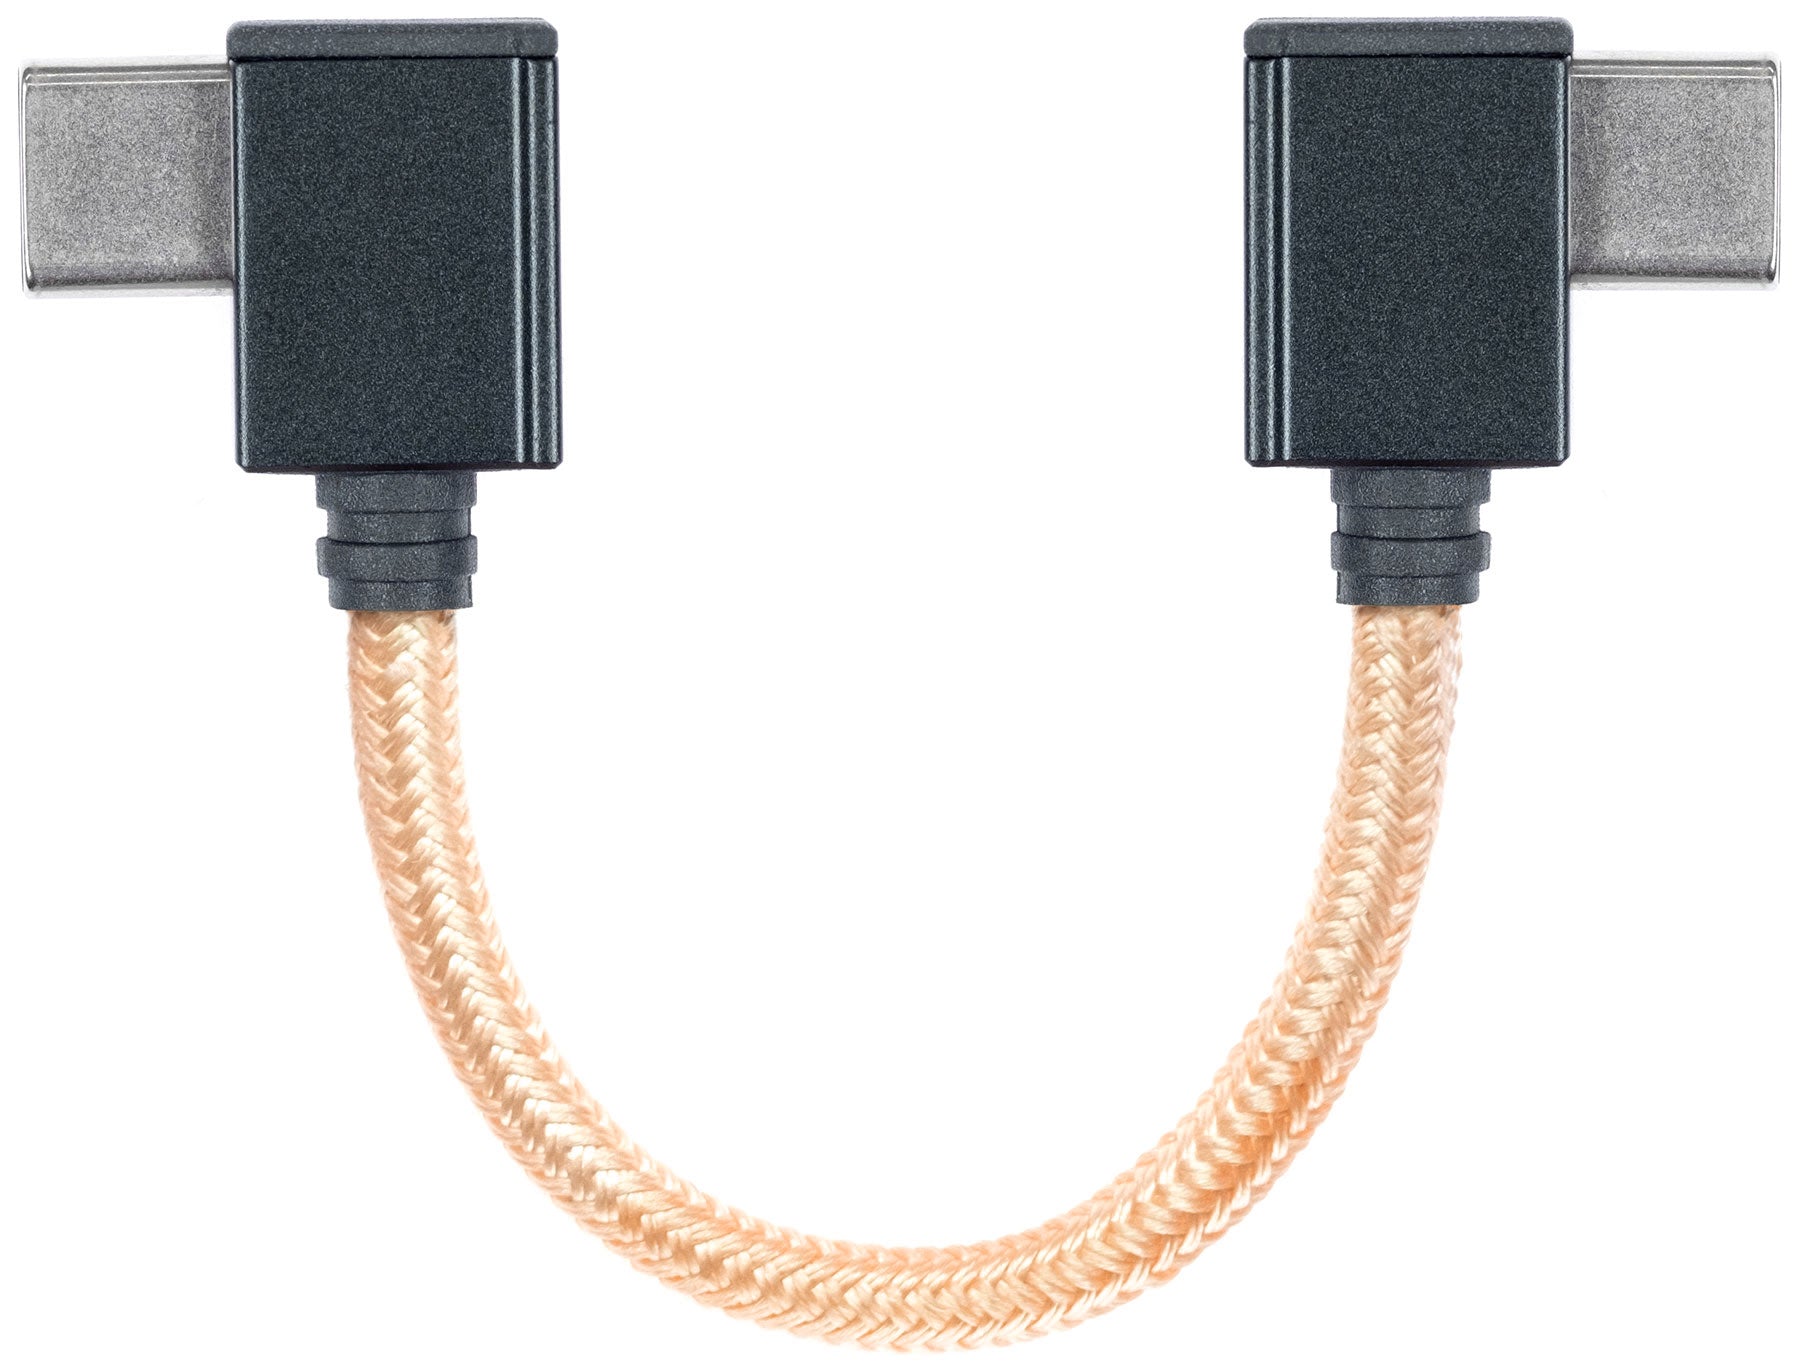 iFi USB-C OTG 90° cable